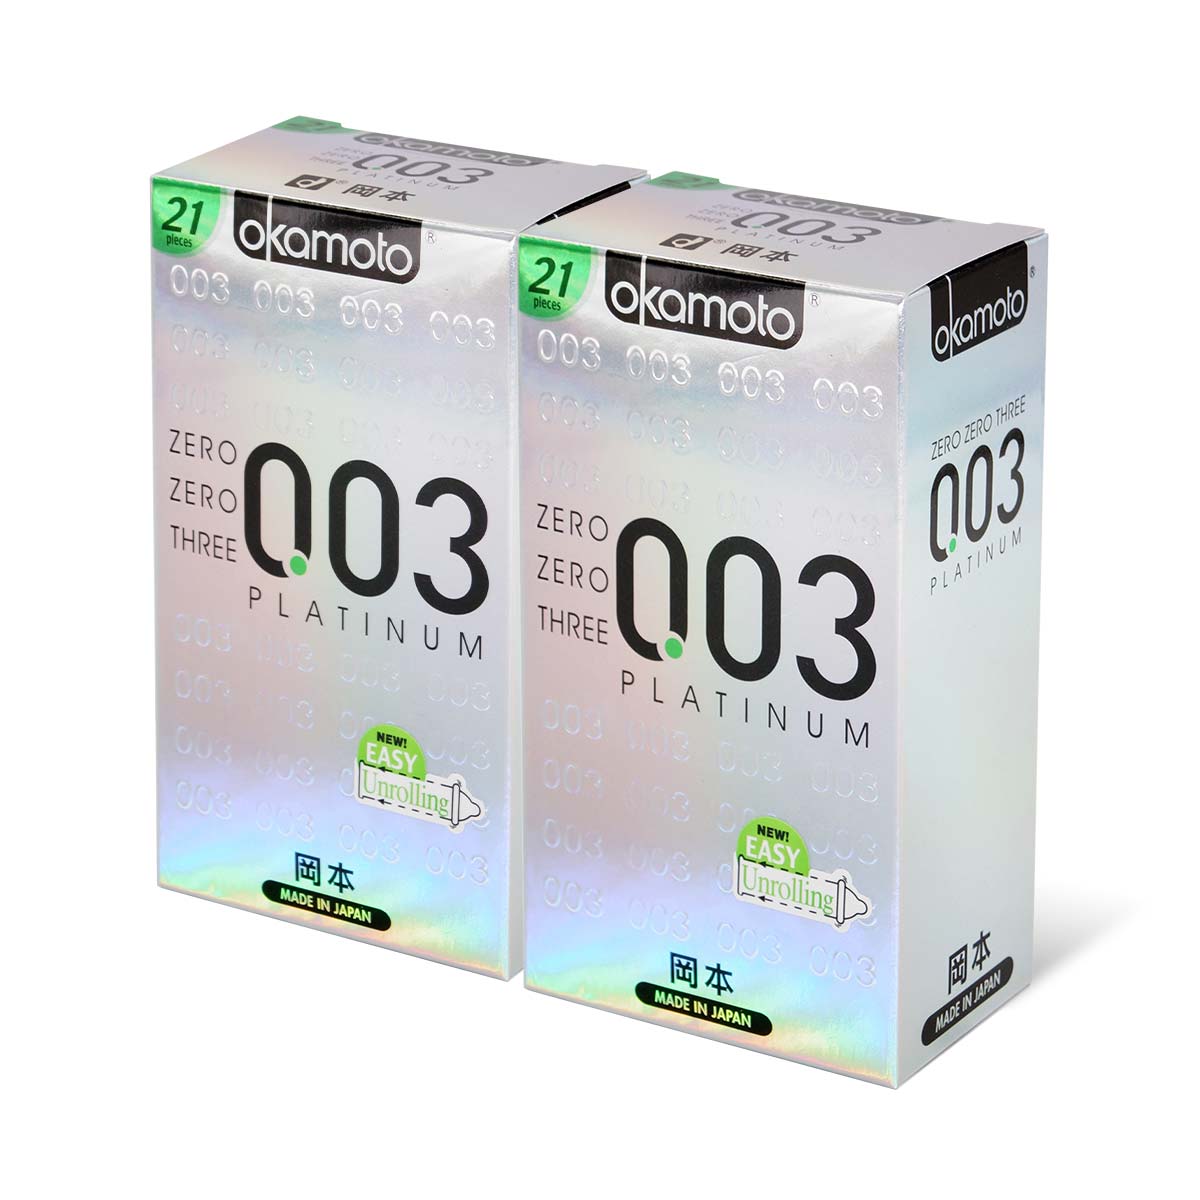 Okamoto 0.03 Platinum 21s Twin Pack Set 42 pieces condom-thumb_1